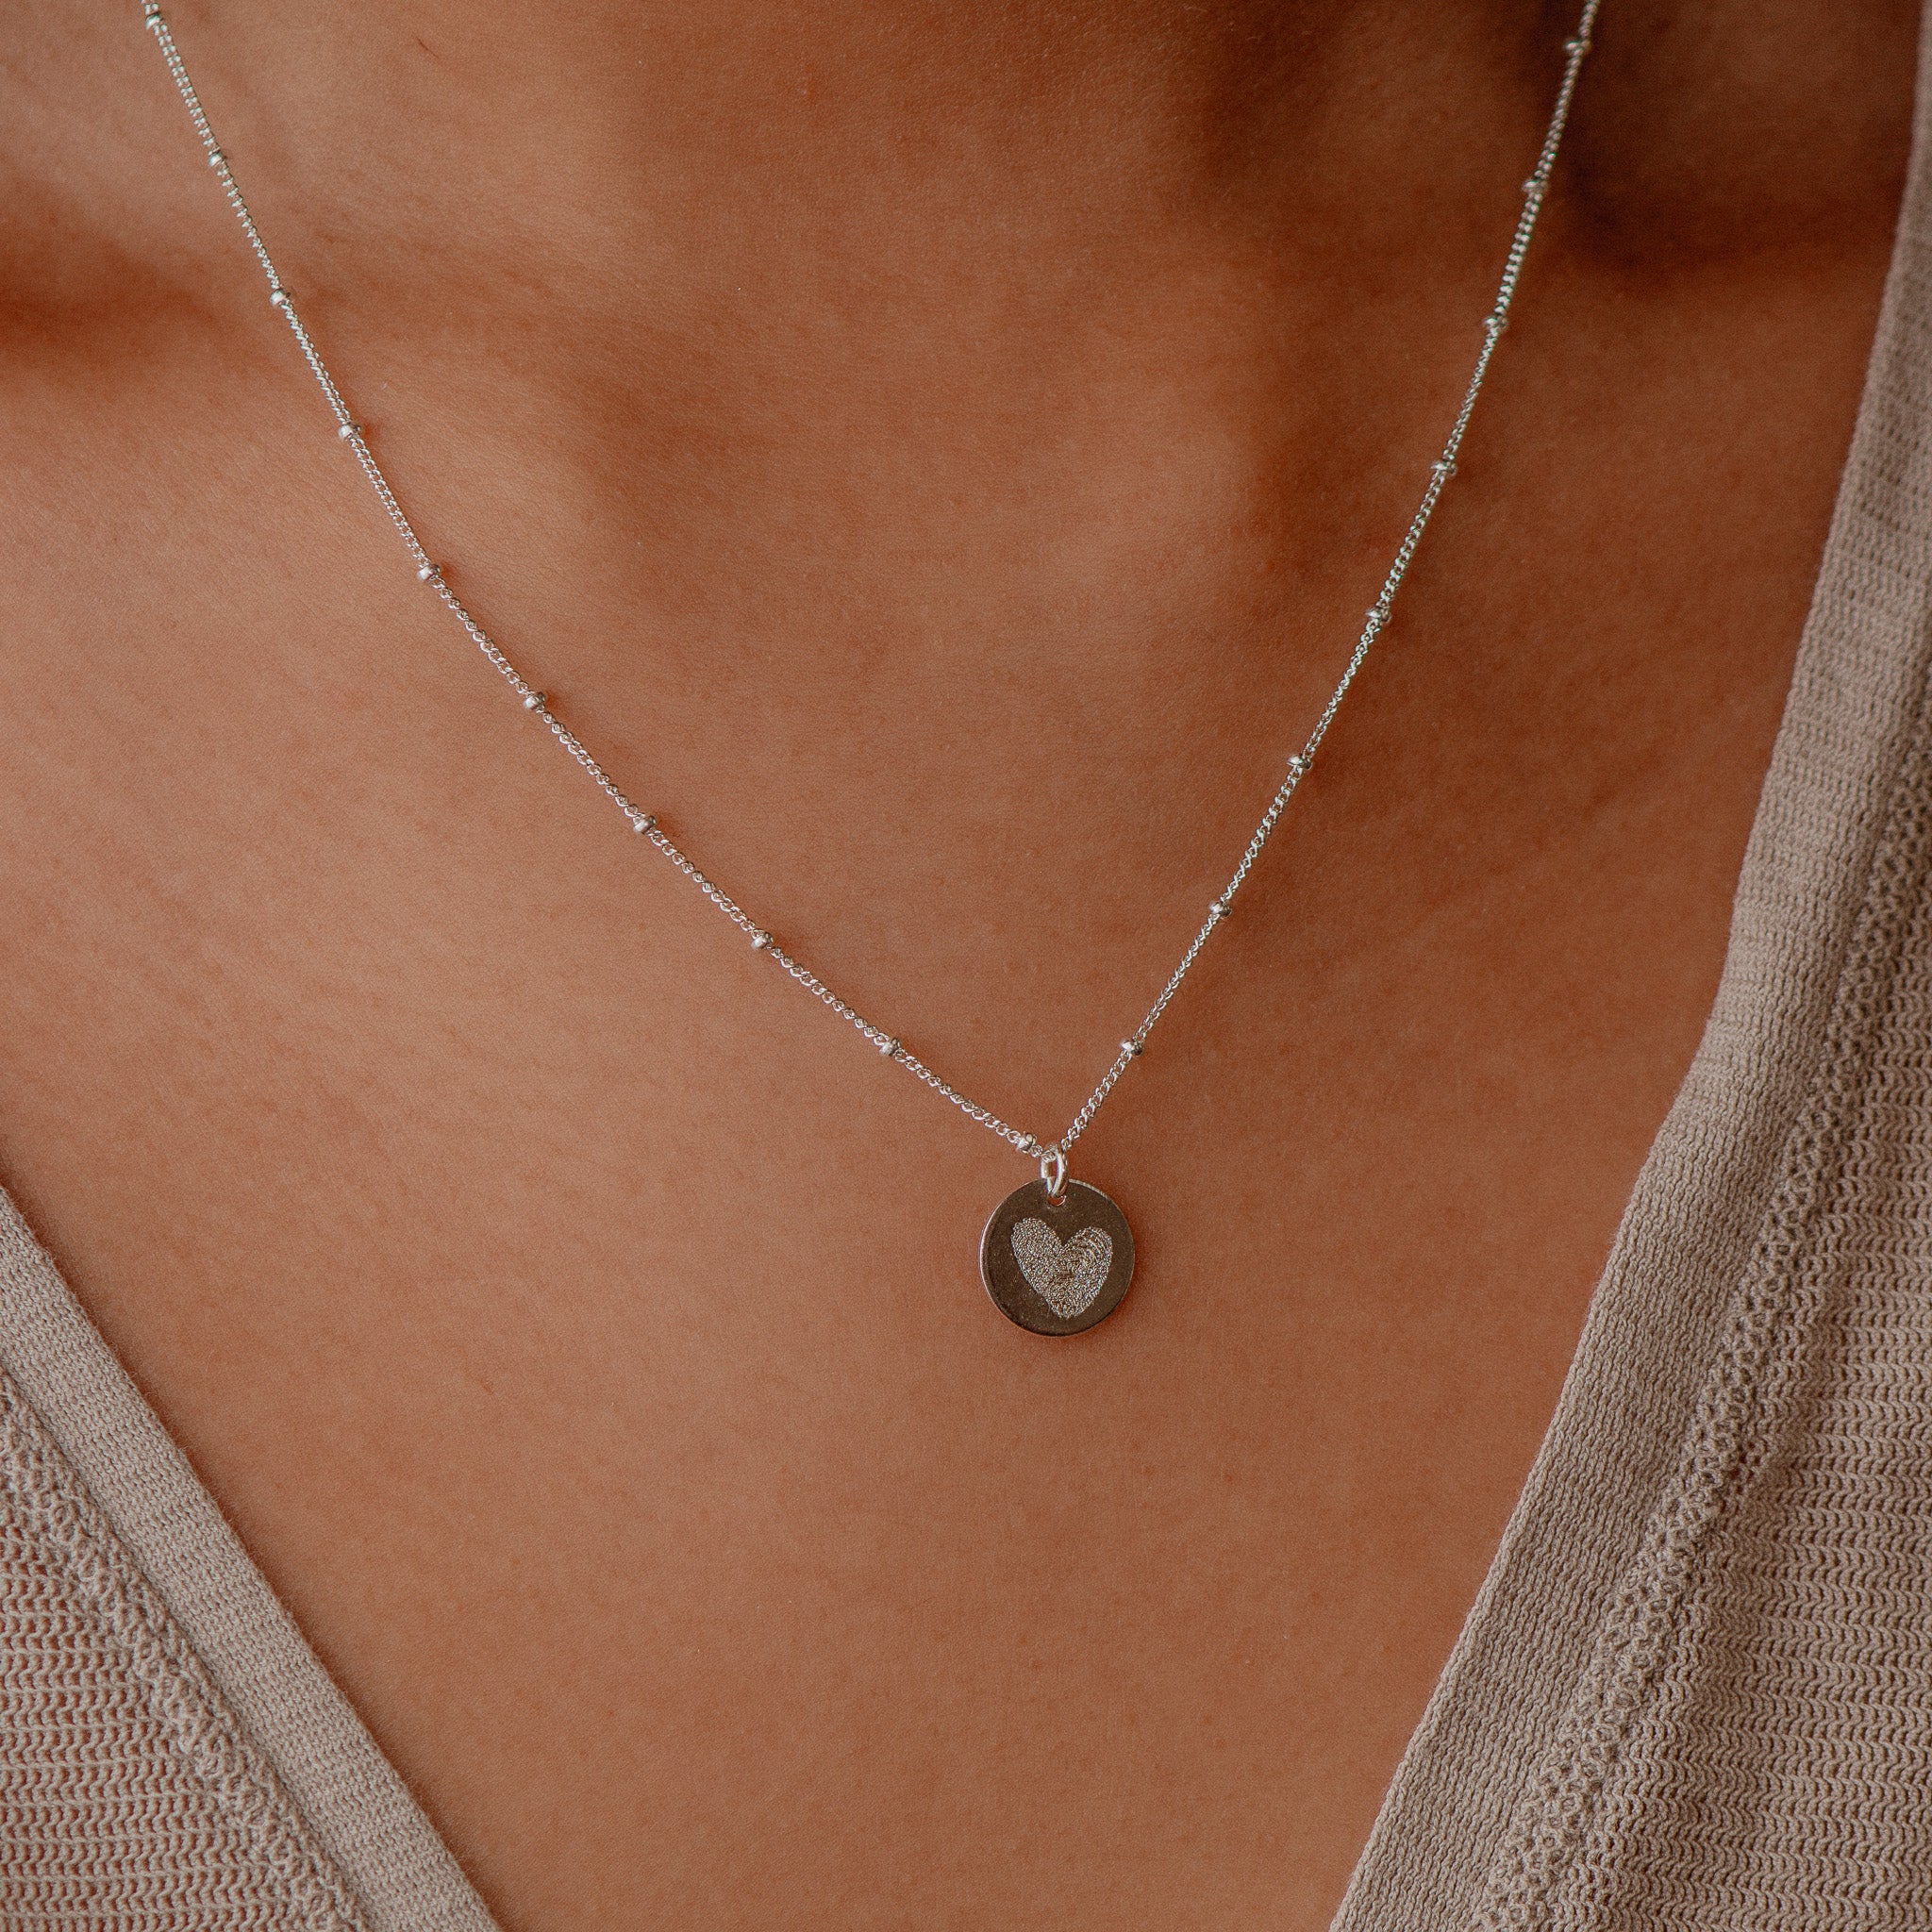 Small Silver Fingerprint Necklace